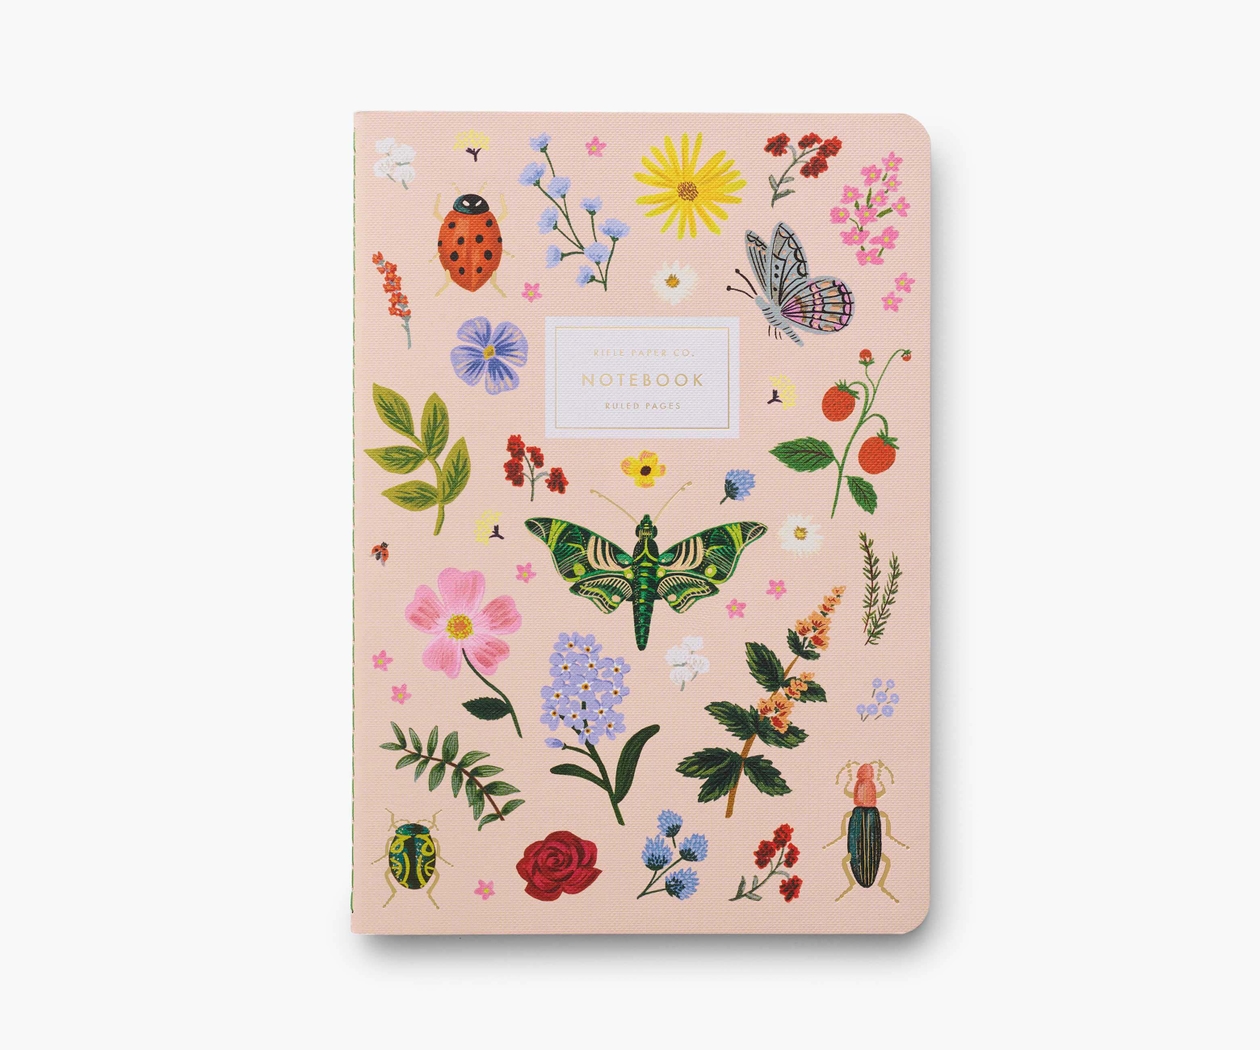 Curio Stitched Stitched Notebook Set 2